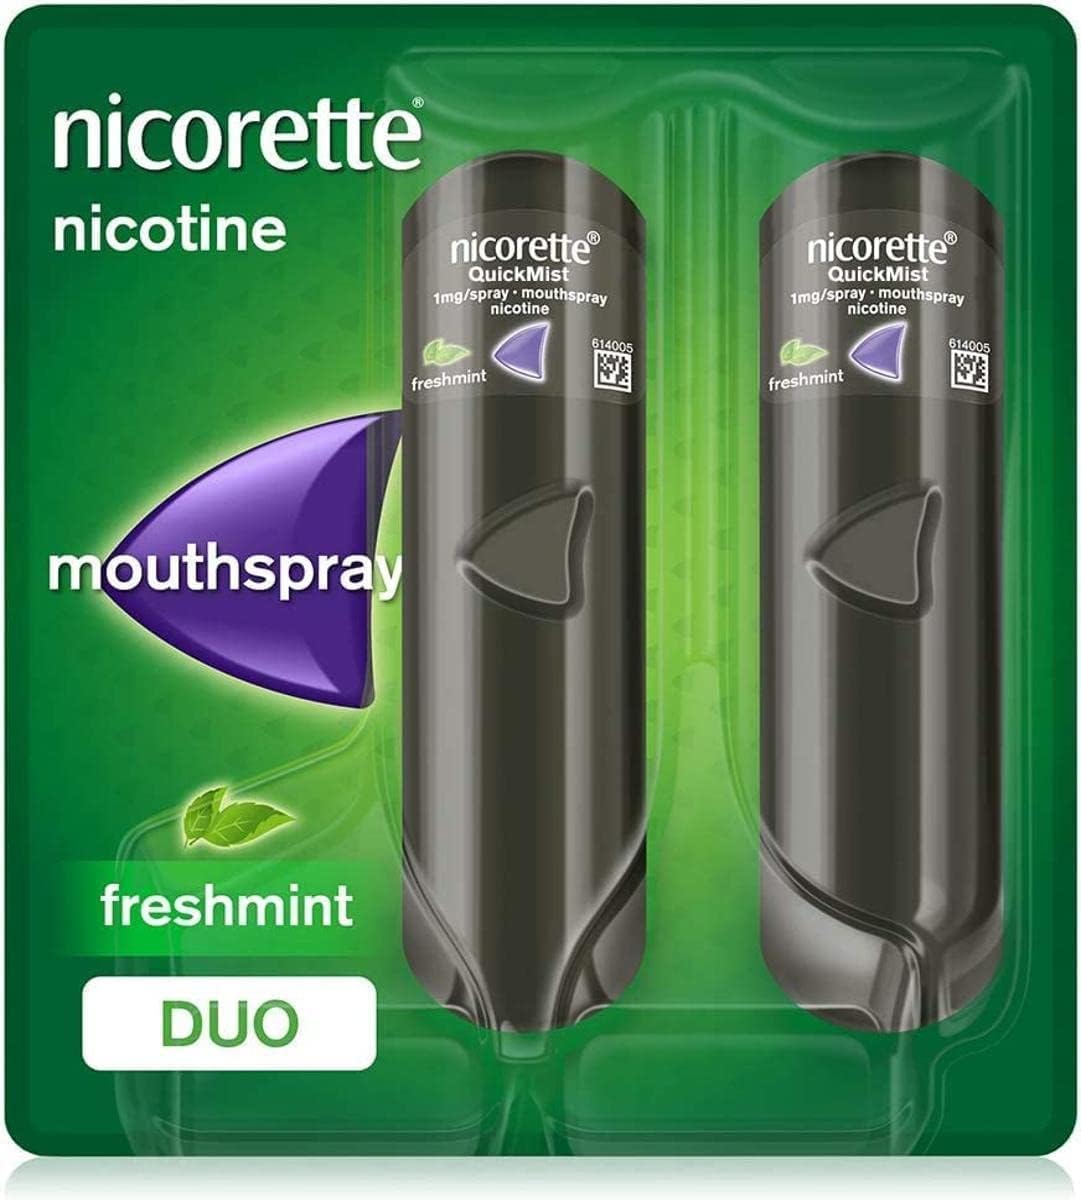 Nicorette Quick Mist, stop smoking fast